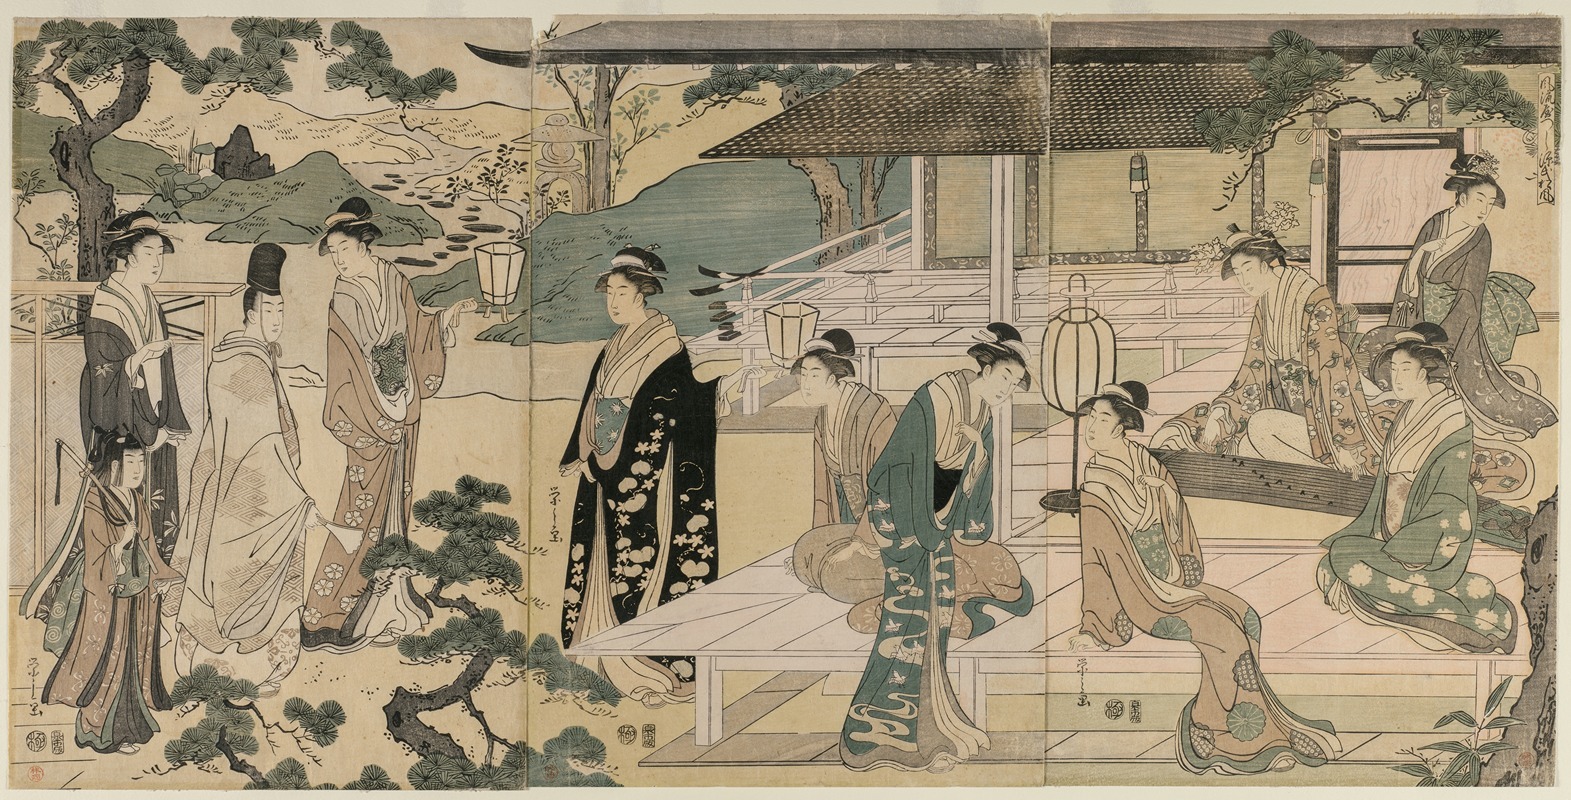 Chōbunsai Eishi - The Matsukaze Chapter of the Tale of Genji (from the series The Tale of Genji in Elegant Modern Dress)